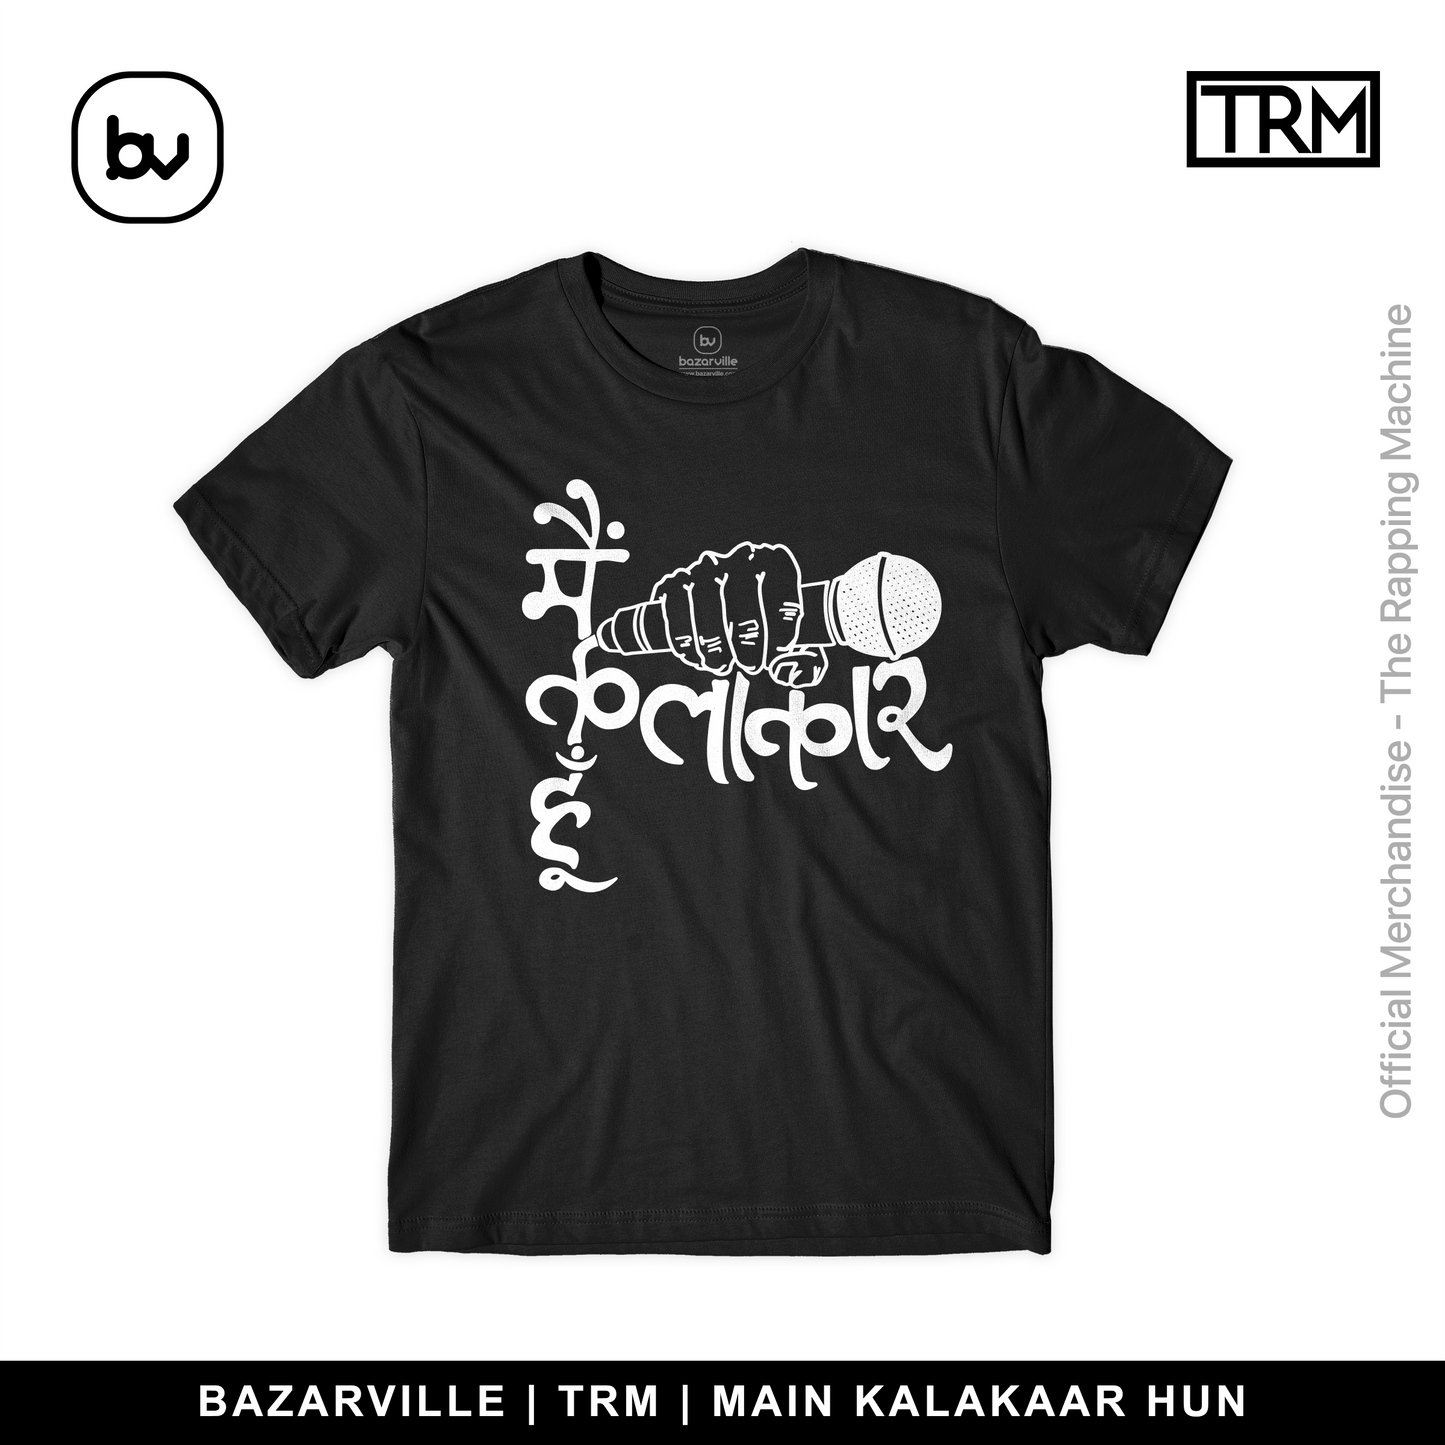 Bazarville TRM S / Black MAIN KALAKAR HU - BLACK